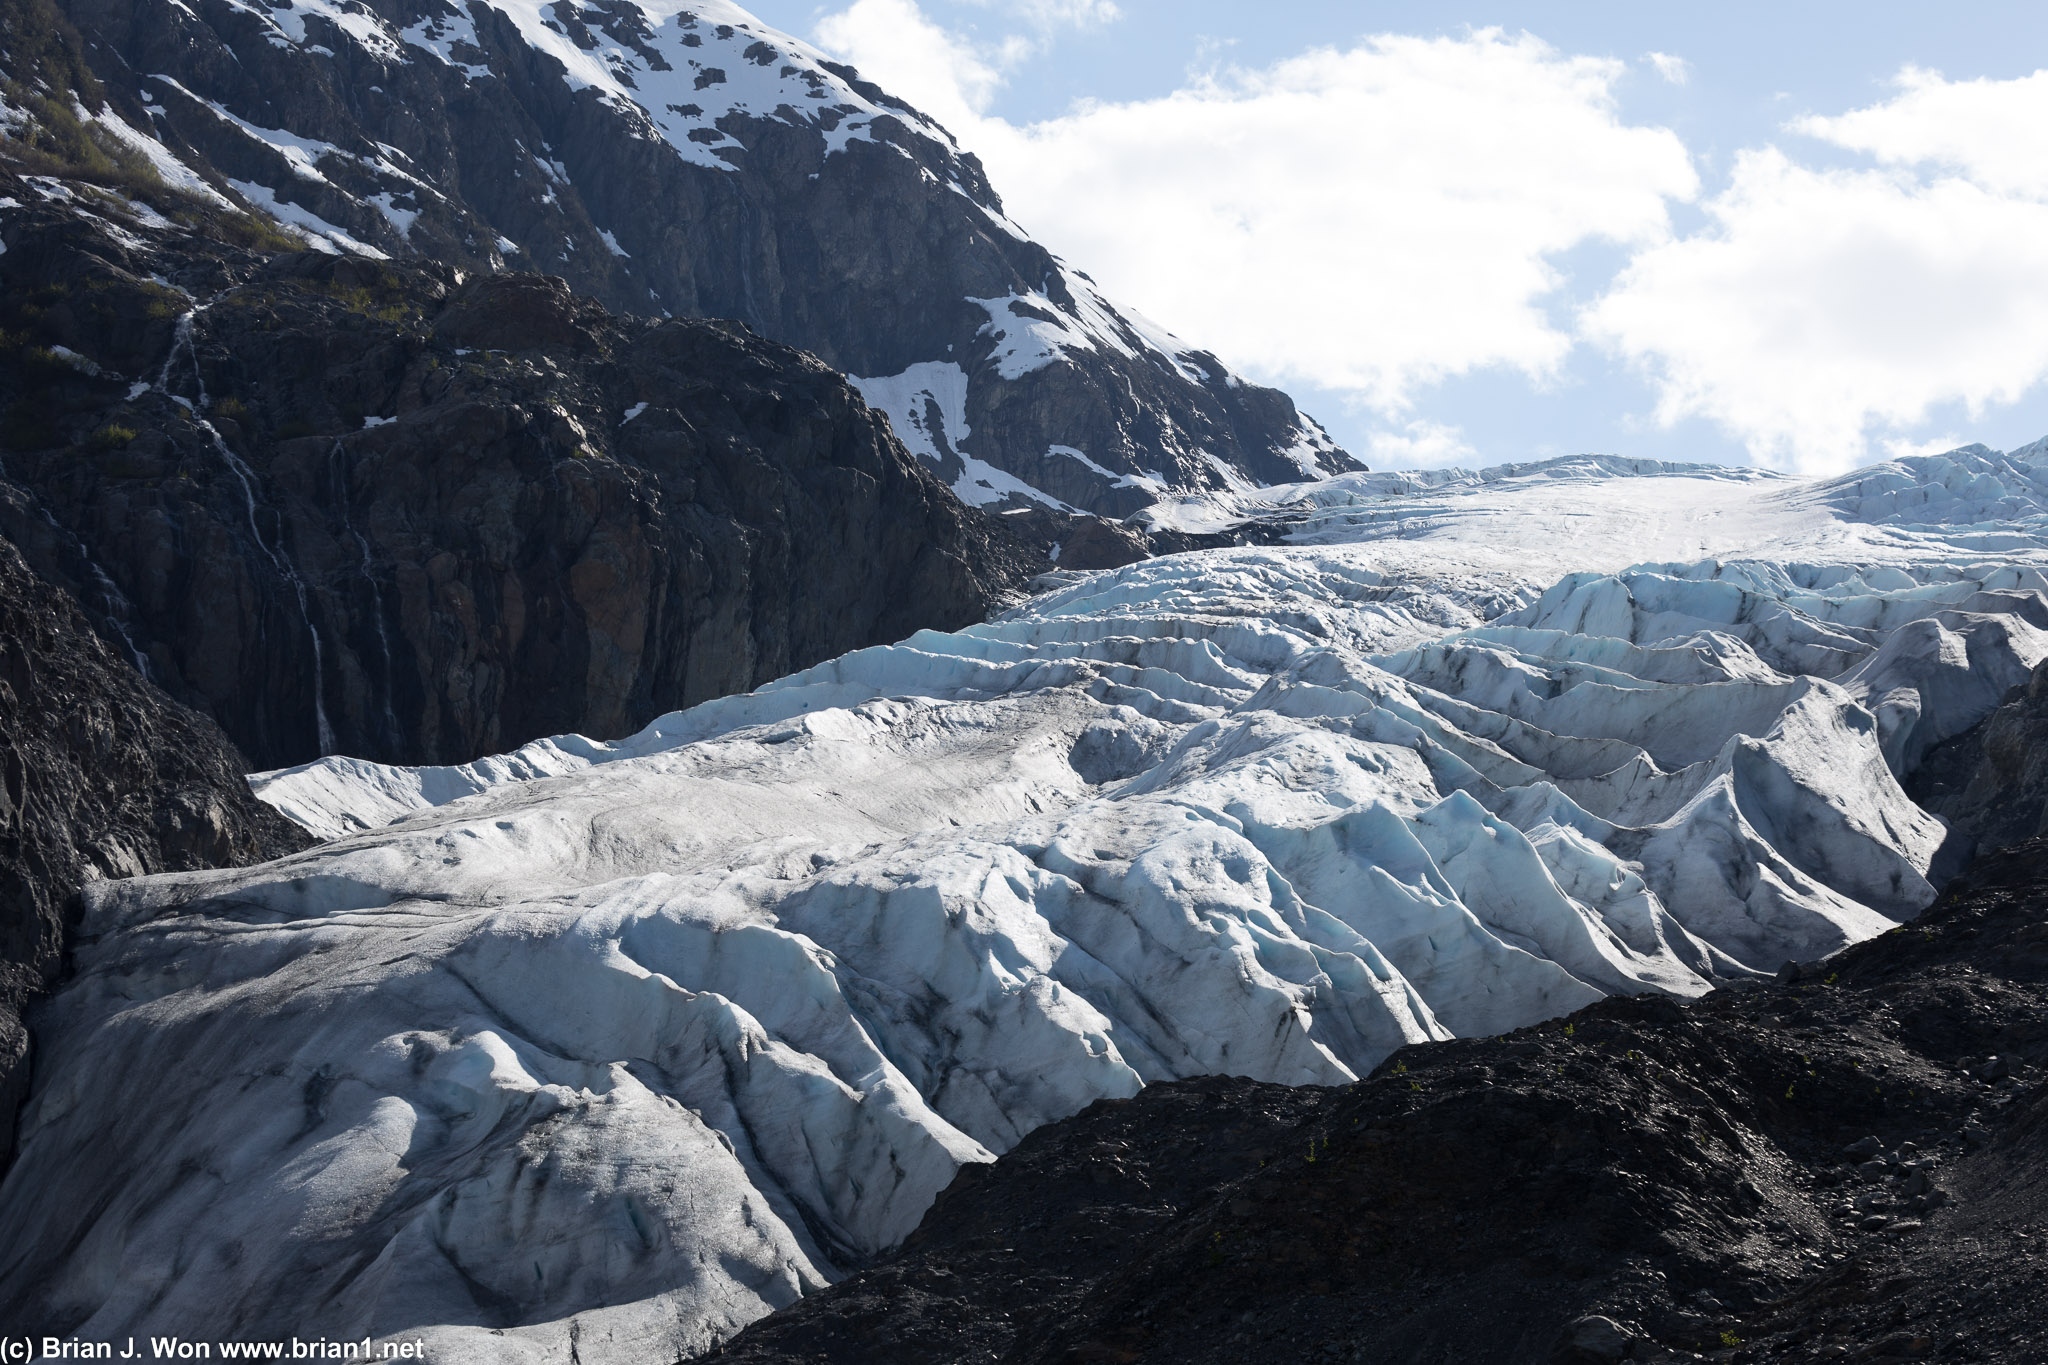 Gotta say, glaciers are amazing places.